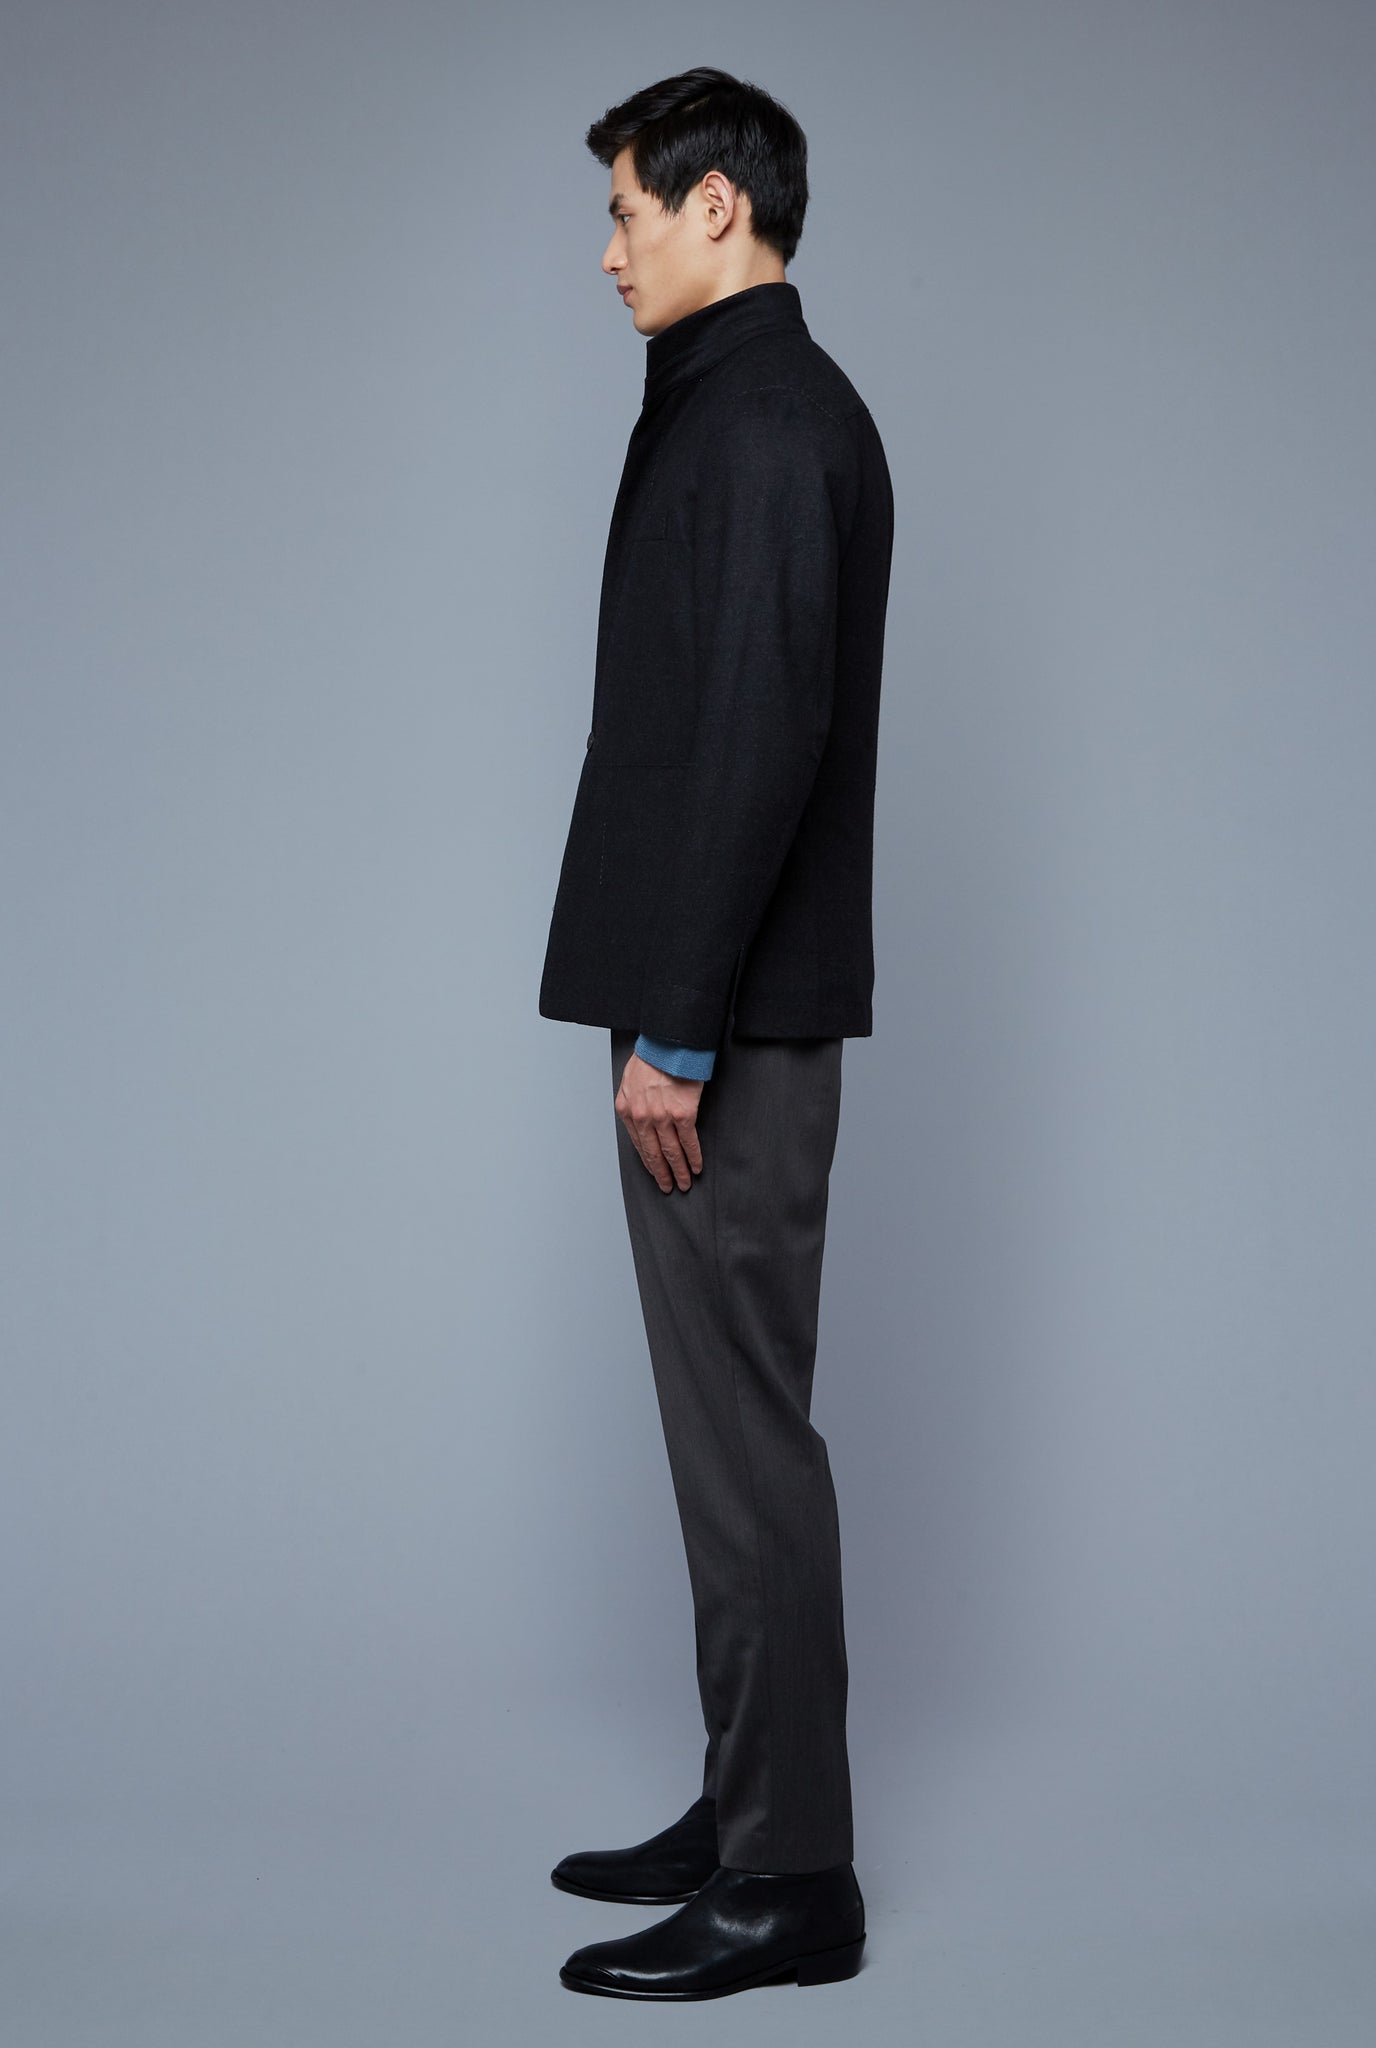 Side View: Model Qiang Li wearing Architect's Jacket